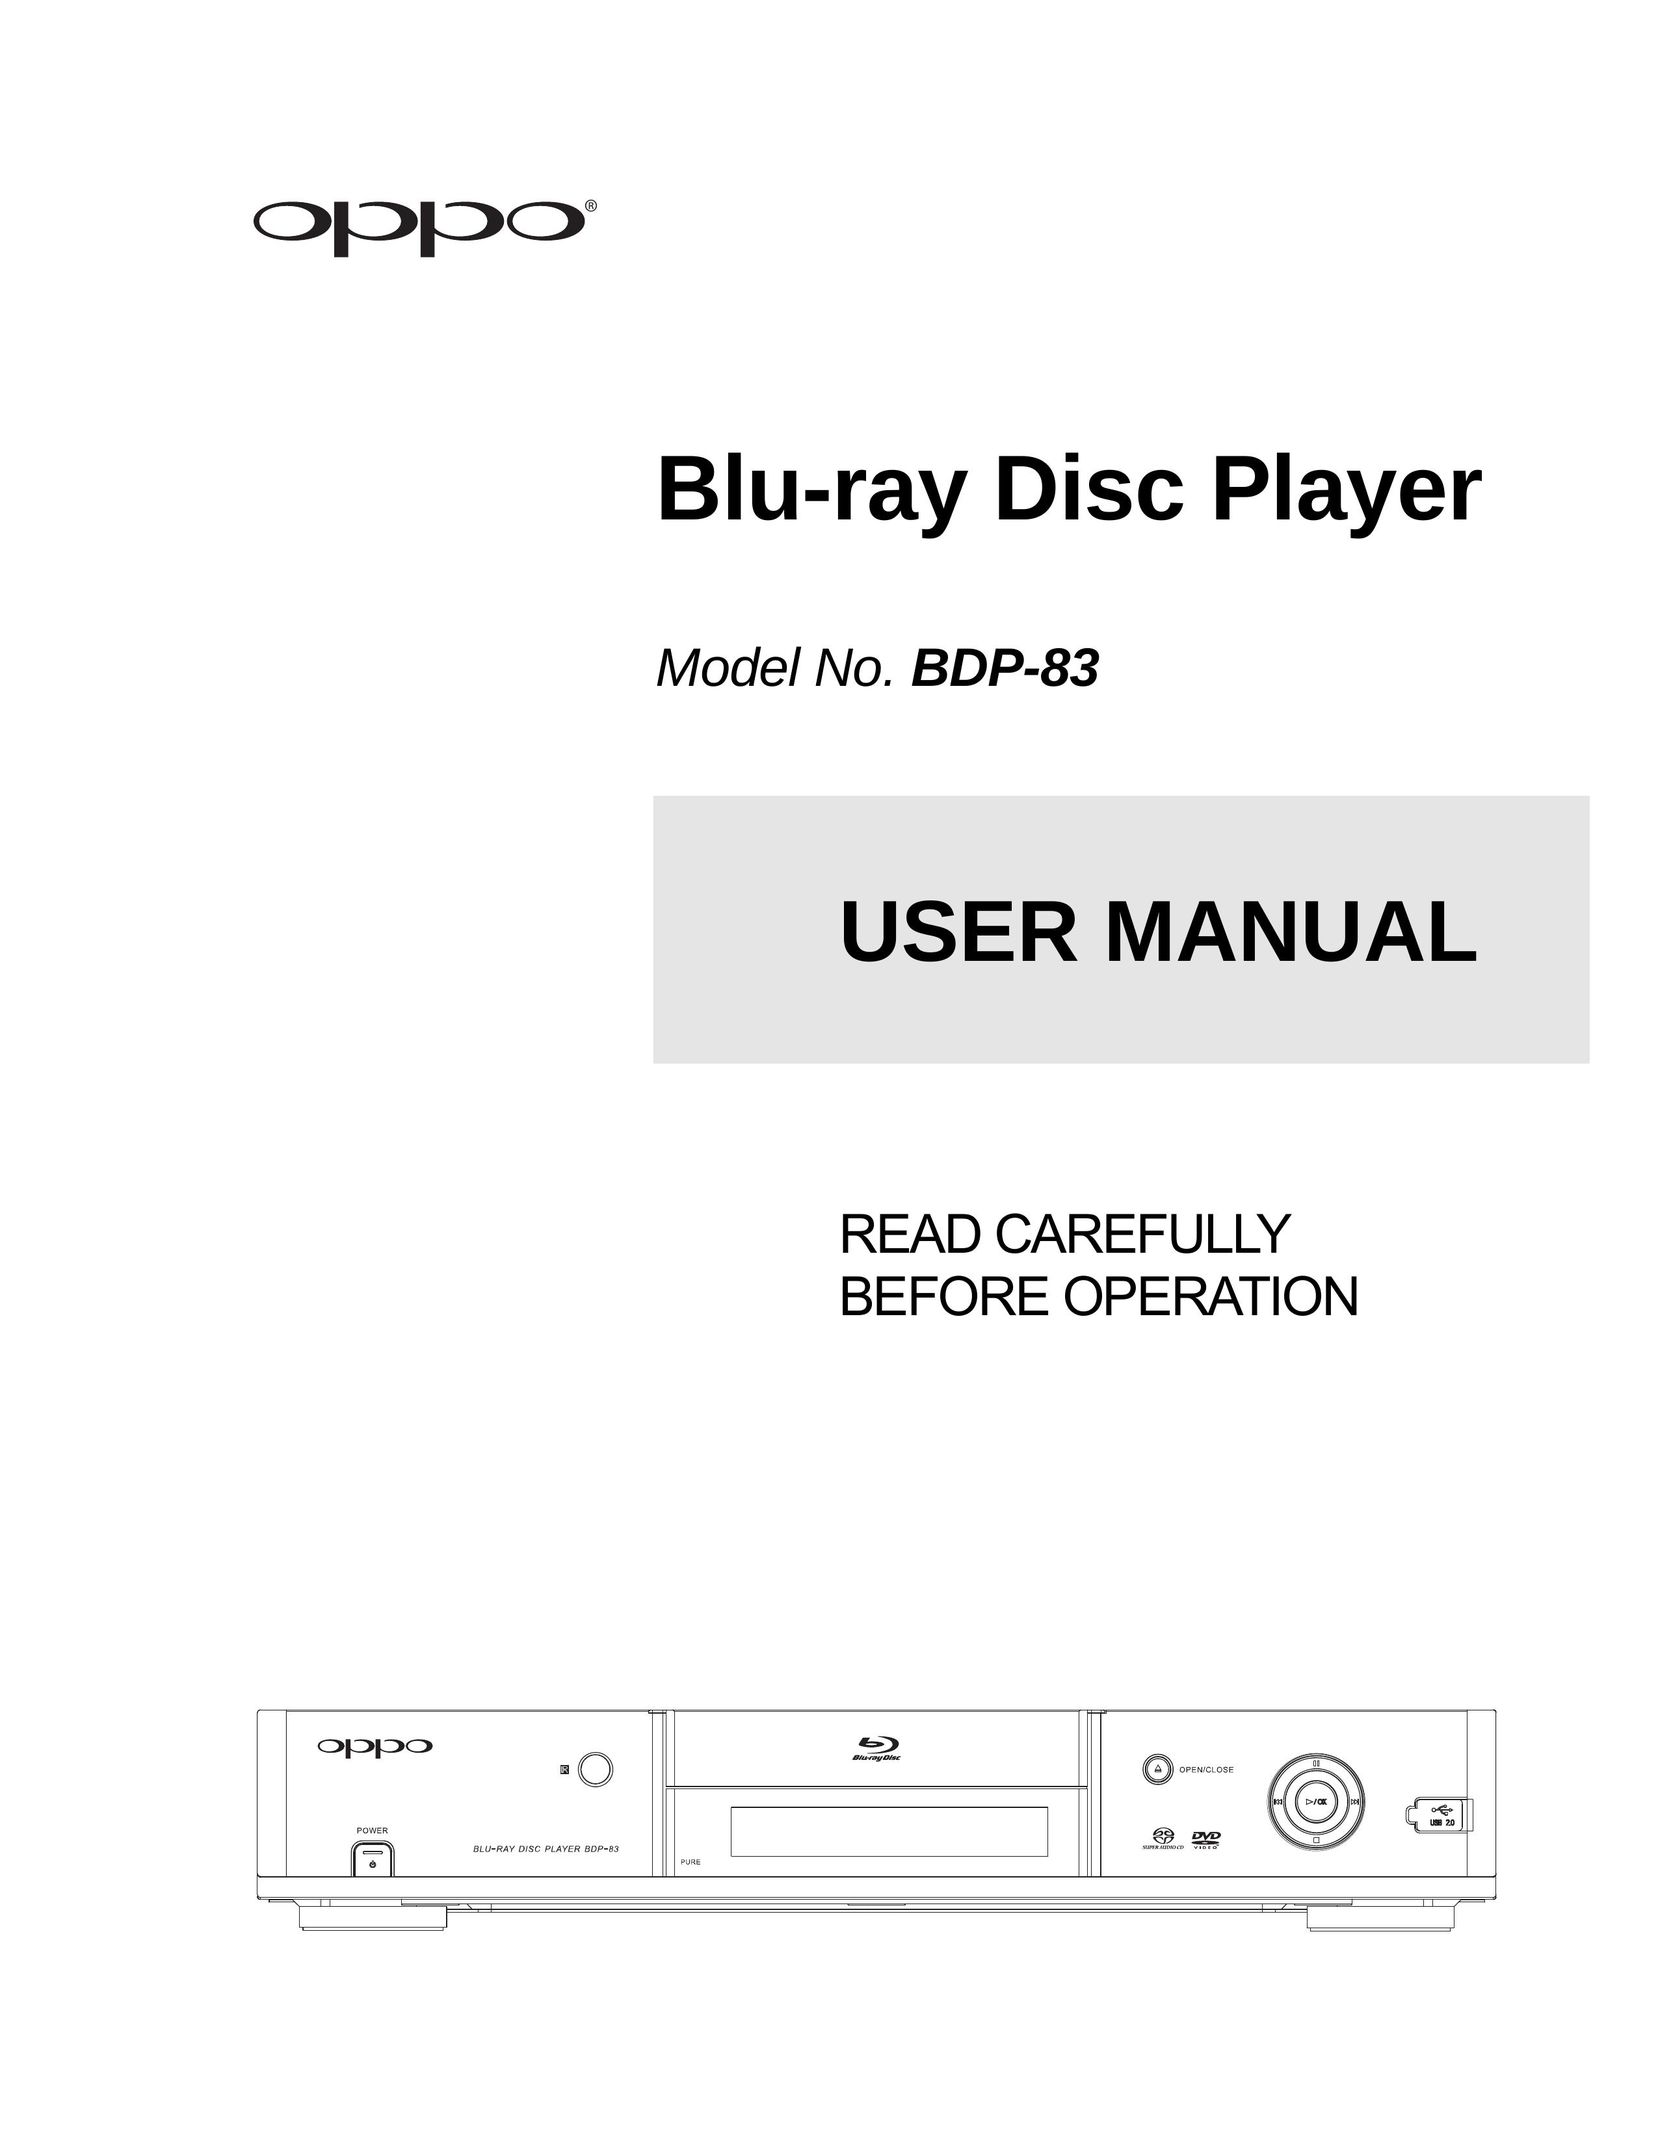 OPPO Digital BDP-83 Blu-ray Player User Manual